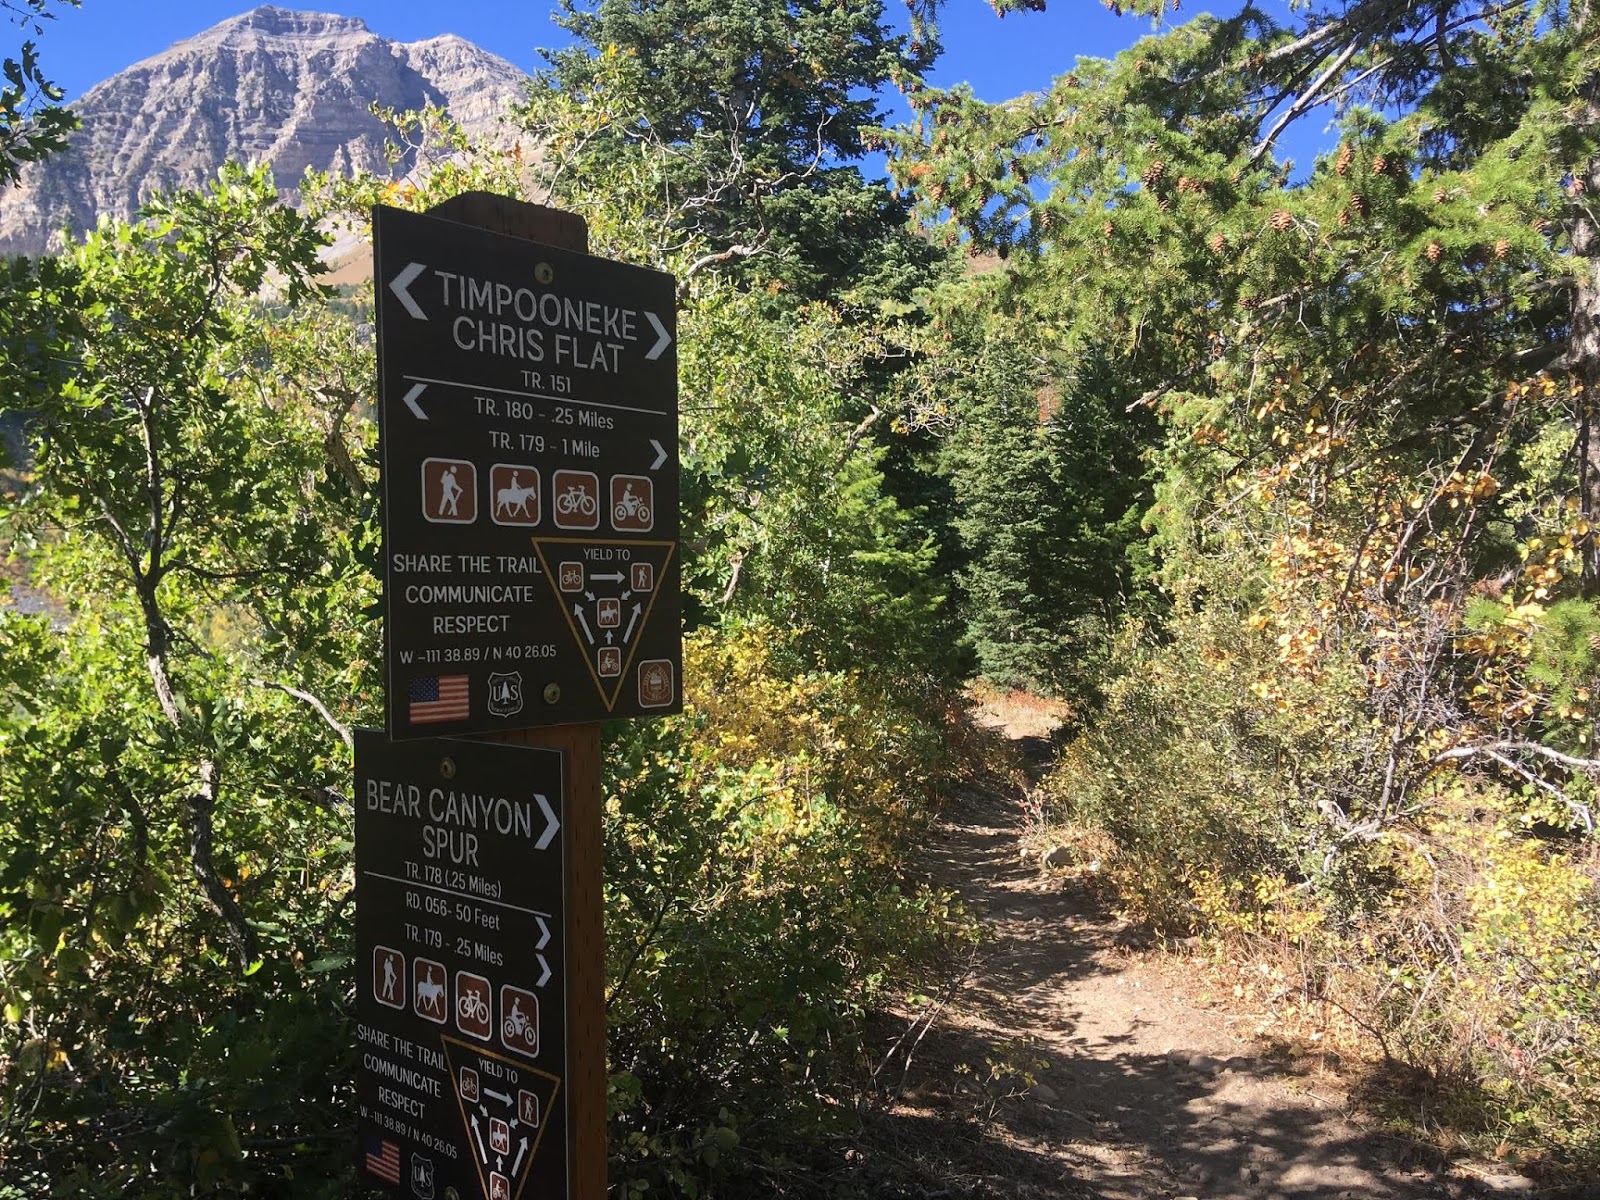 Hiking to Julie Andrews Meadow, American Fork Canyon, Utah, Hiking in Utah with Dogs